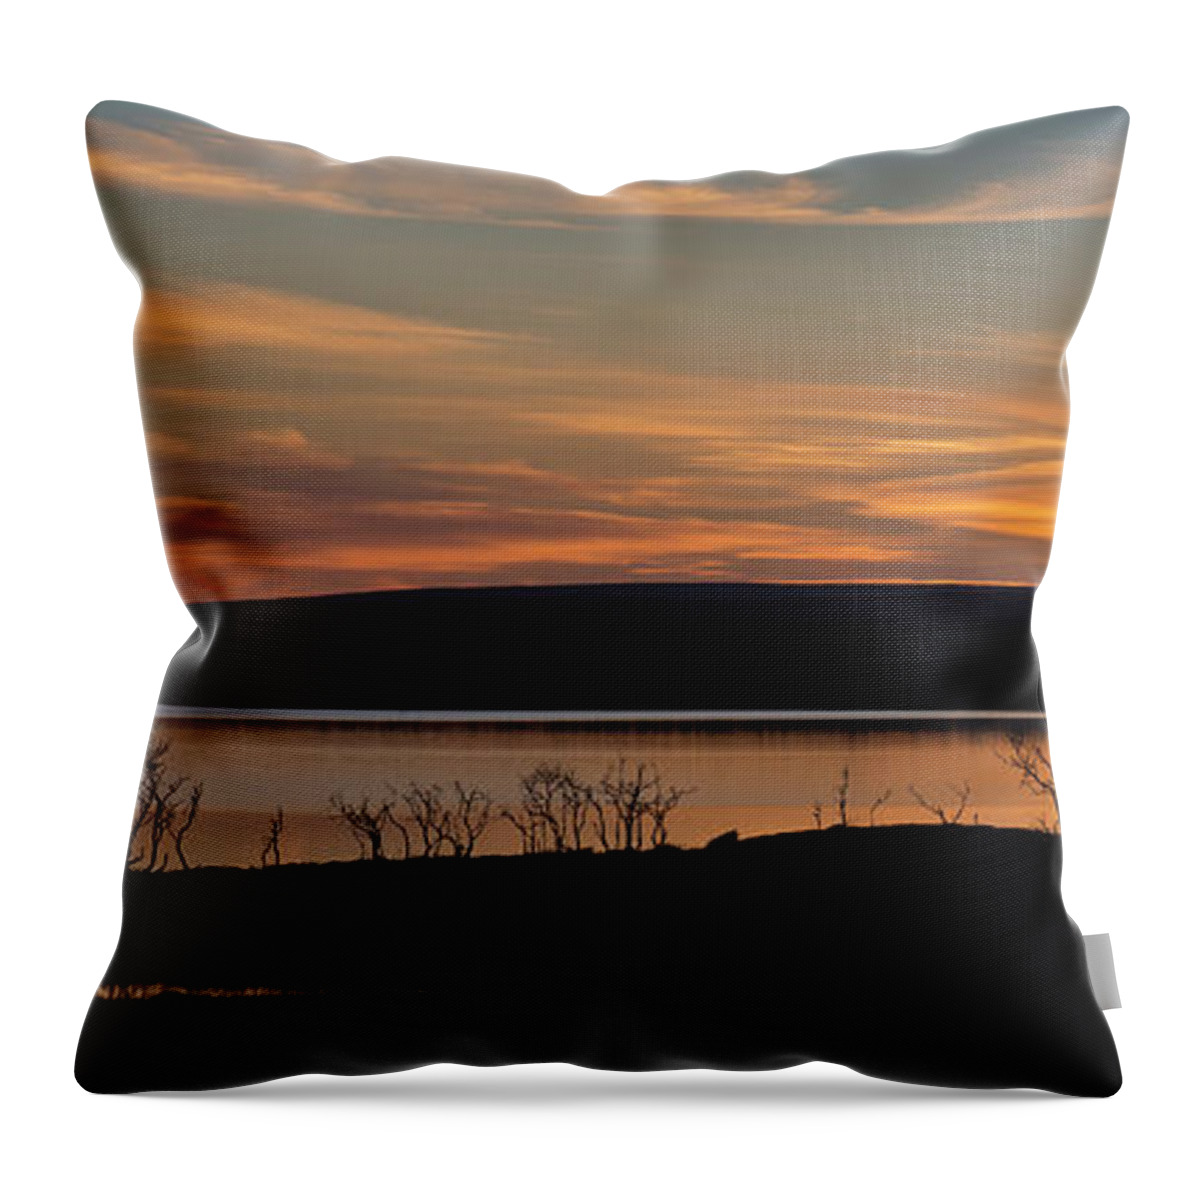 Sunset Throw Pillow featuring the photograph After Sunset by Pekka Sammallahti